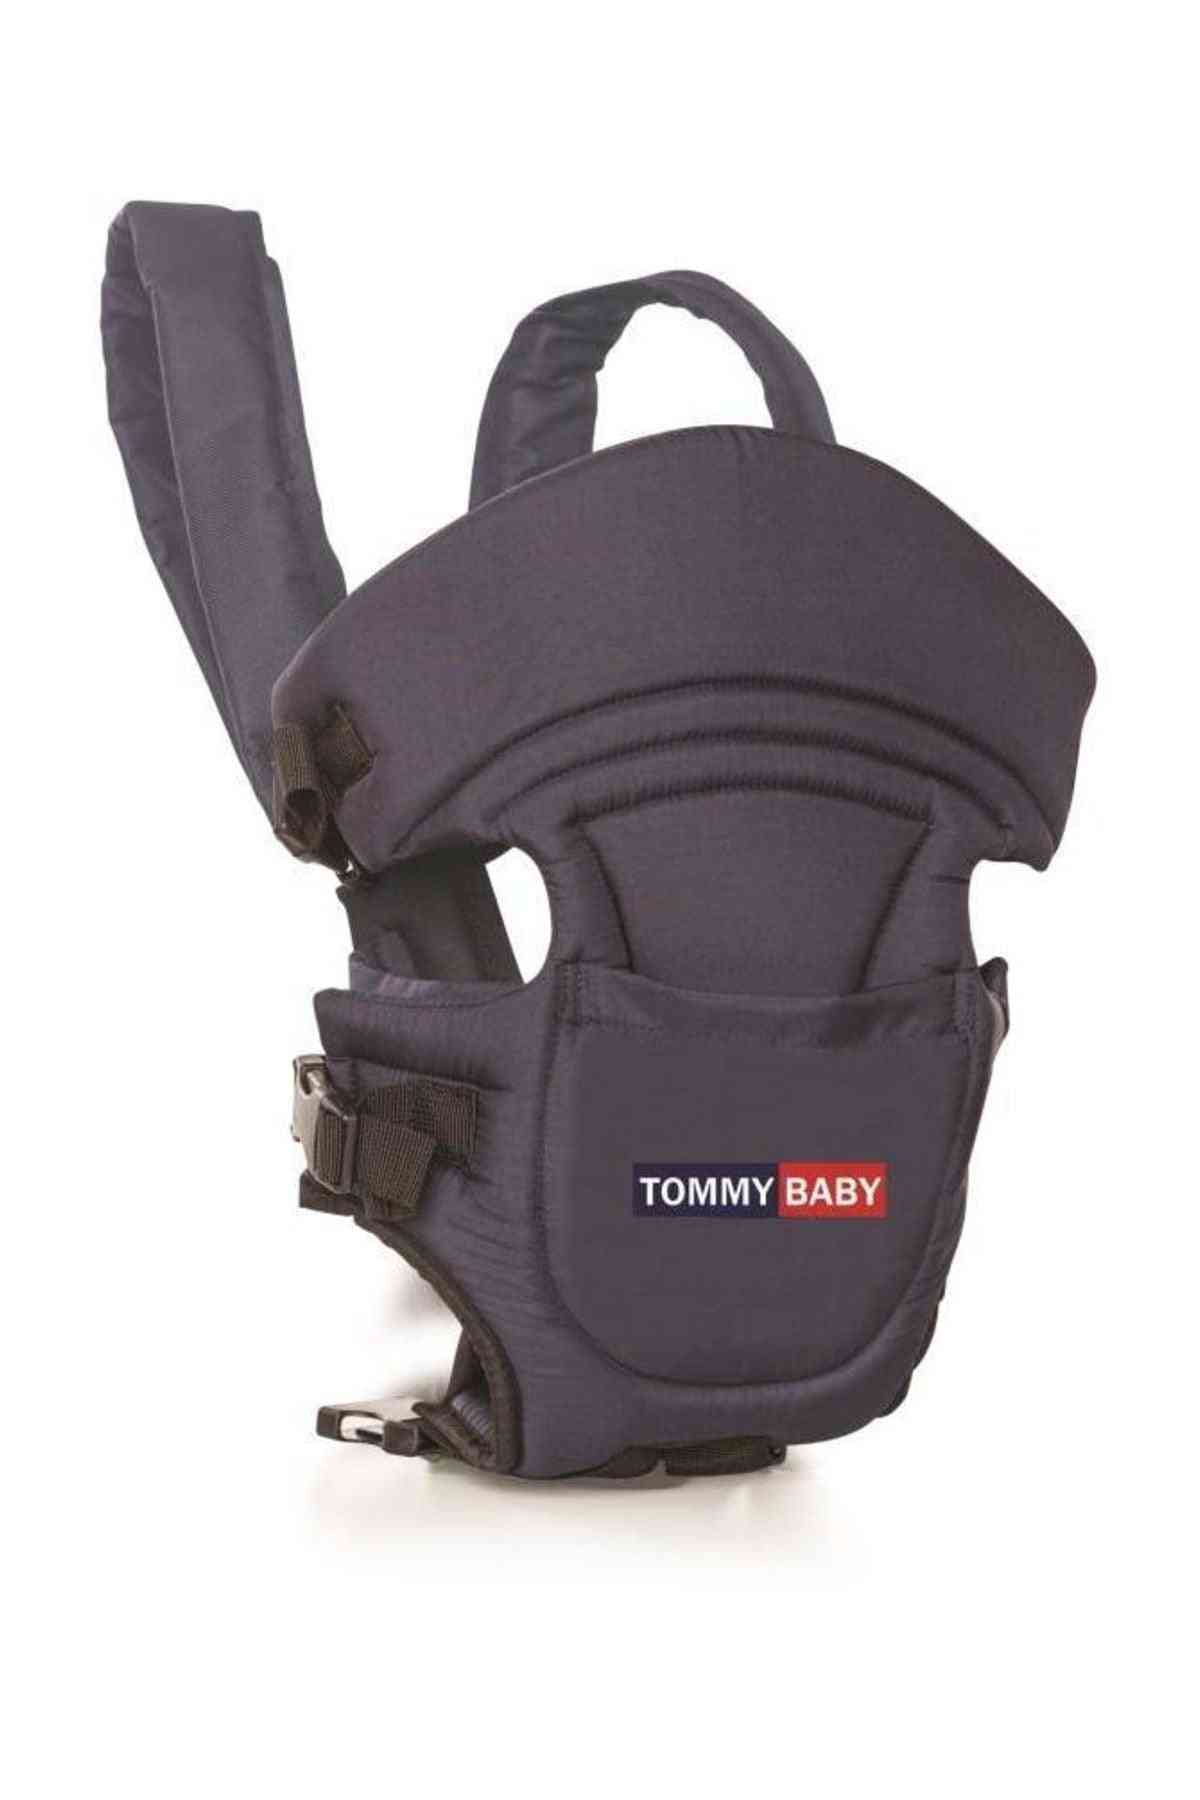 Baby- Carrier Holder Sling Wrap, Backpacks Hip-seat Tool